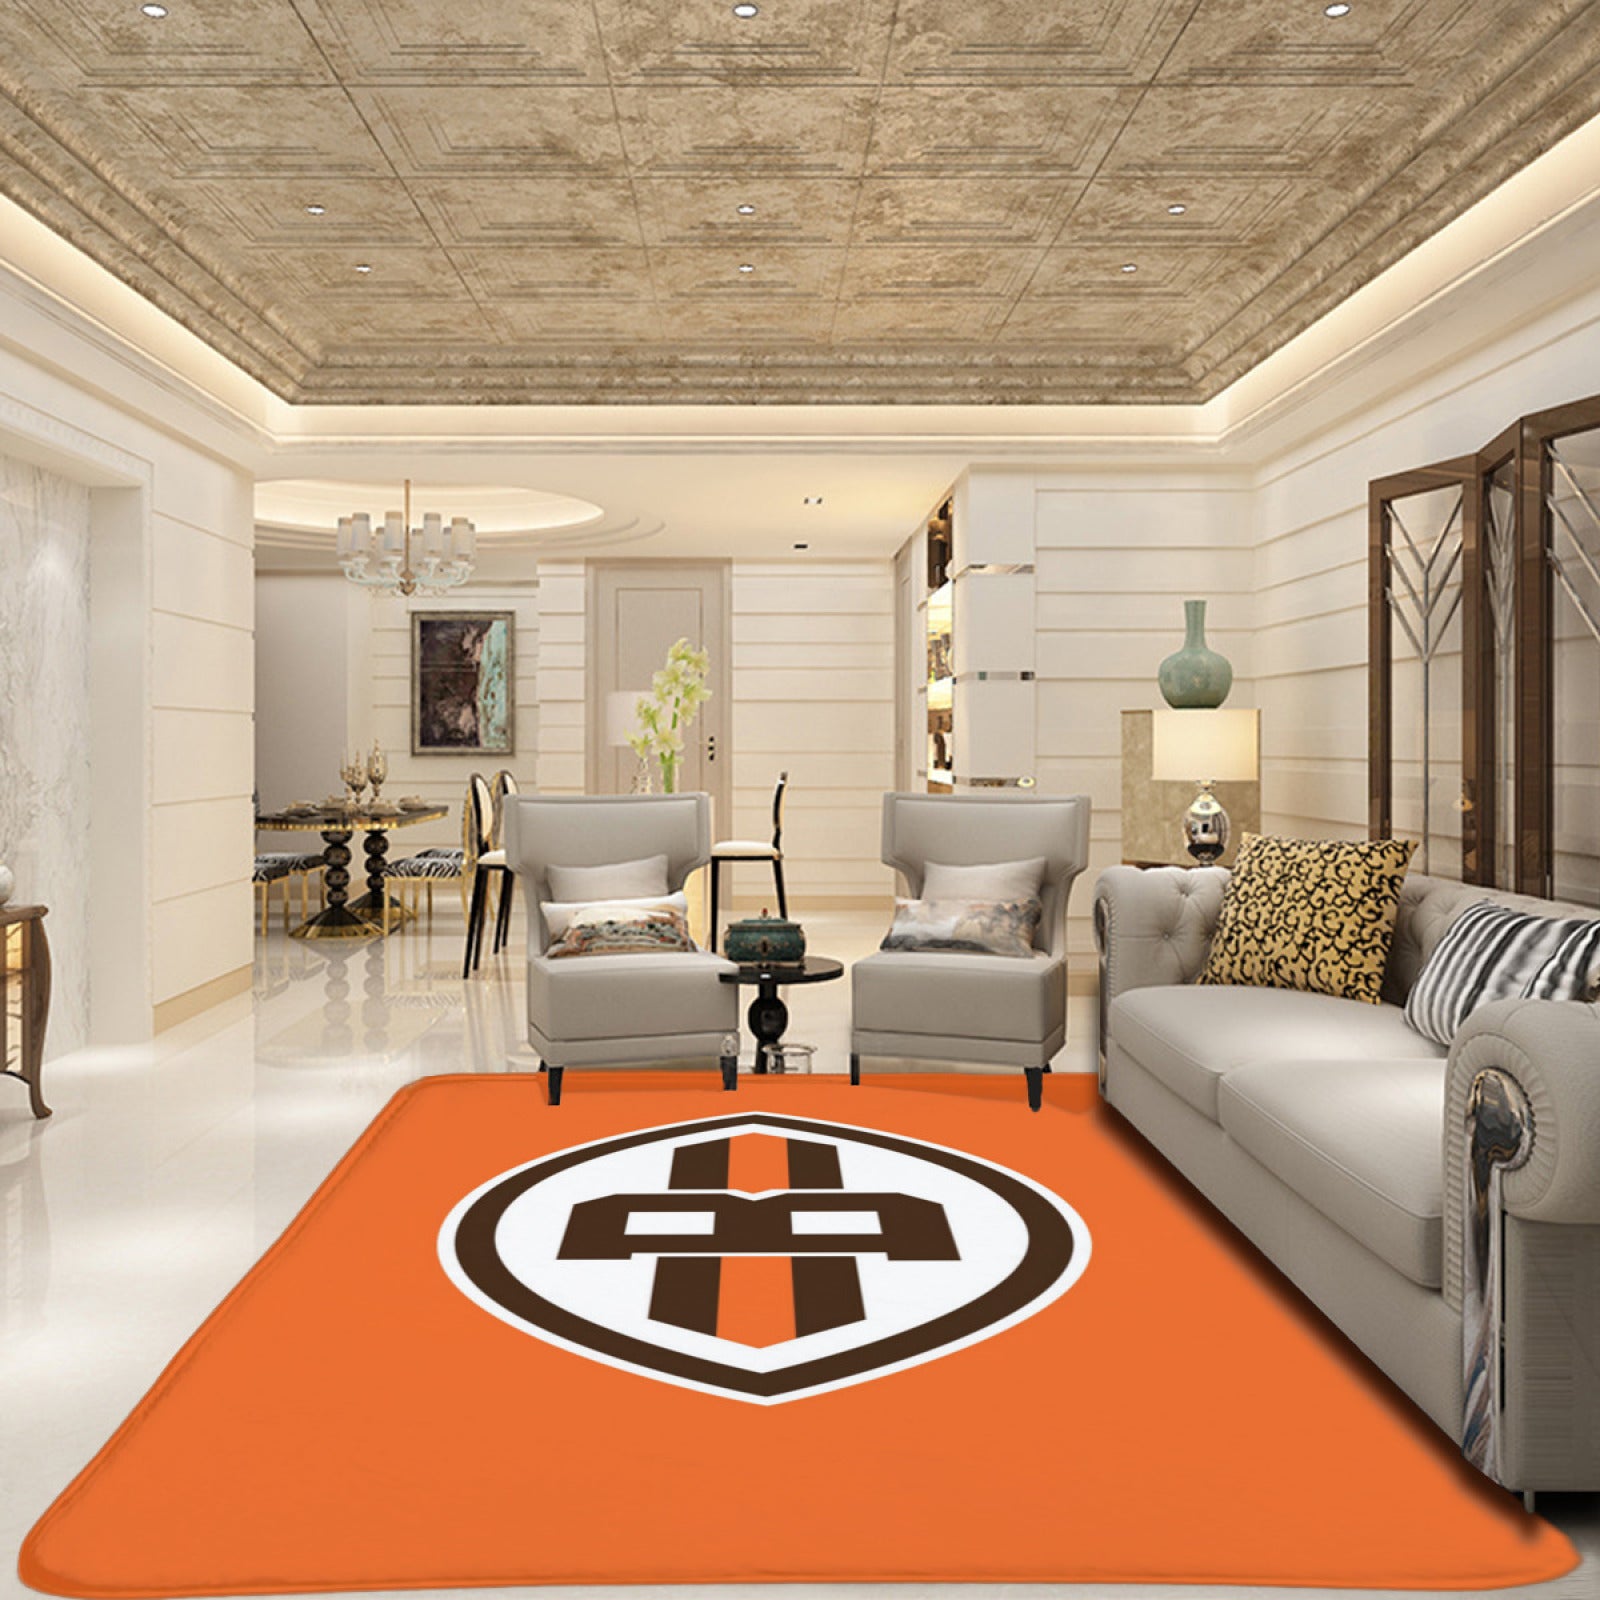 Cleveland Rugby Browns Rugs Bedroom Living Room Bathroom Carpet Mat Rug  chicago bears